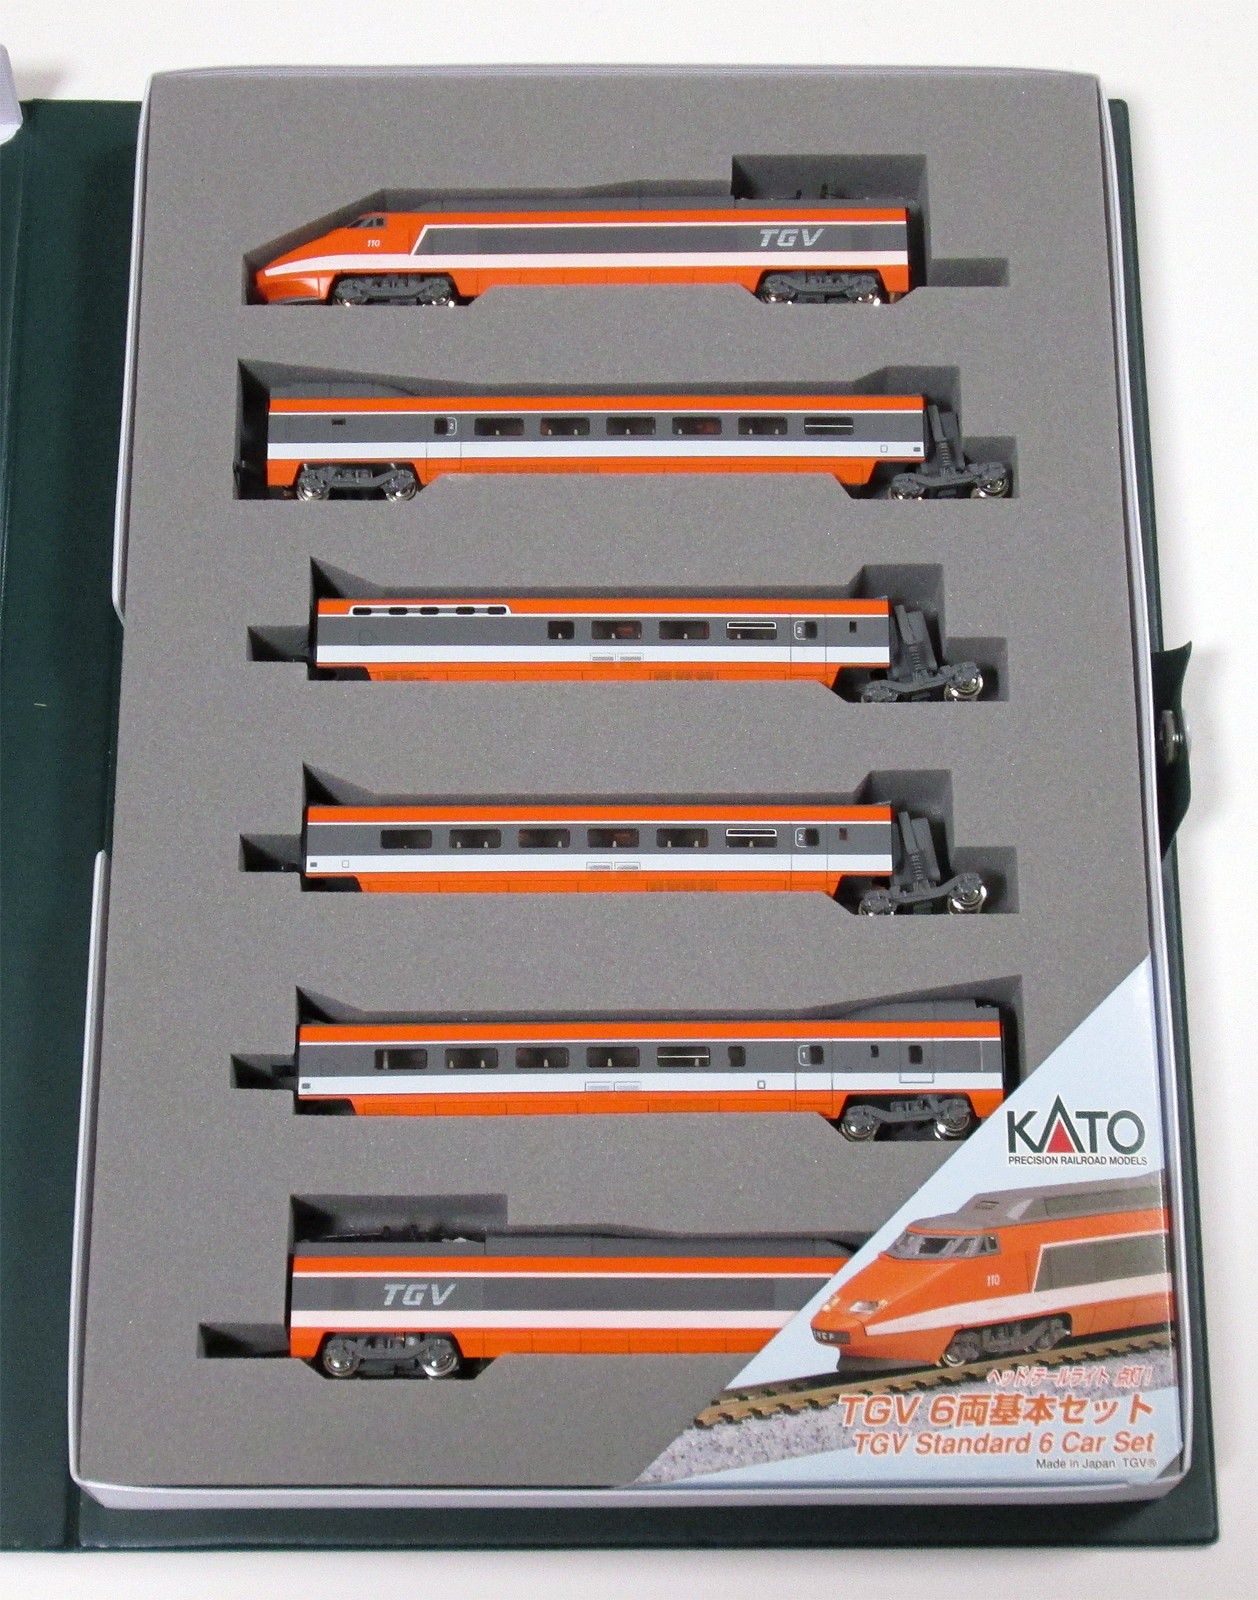 N Scale - Kato Lemke - 10-091 - Passenger Train, Electric, TGV -